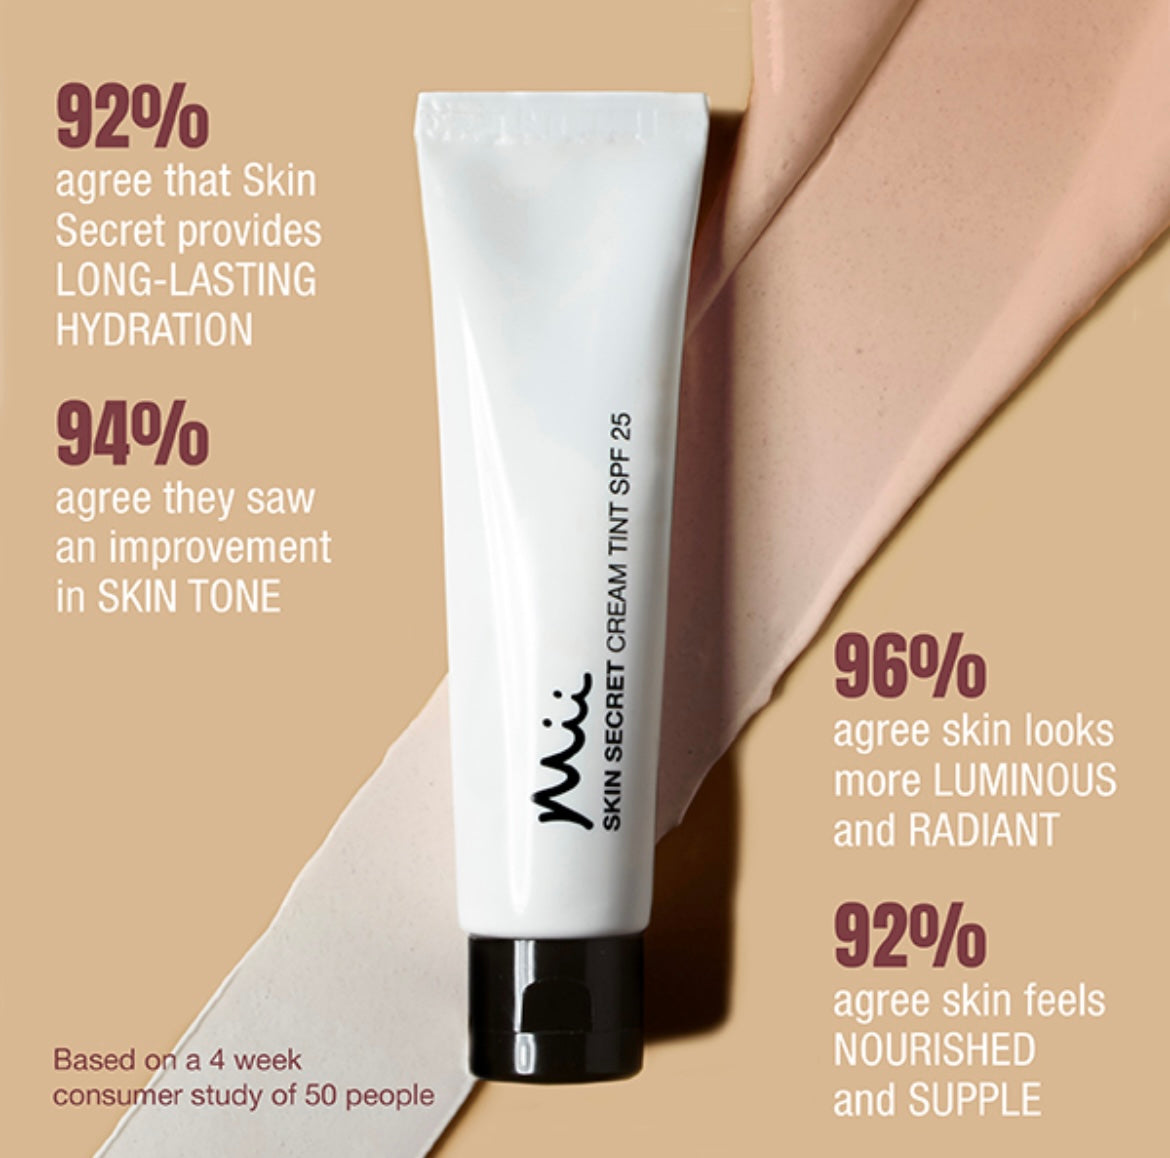 Mii Cosmetics Skin Secret Cream Tint